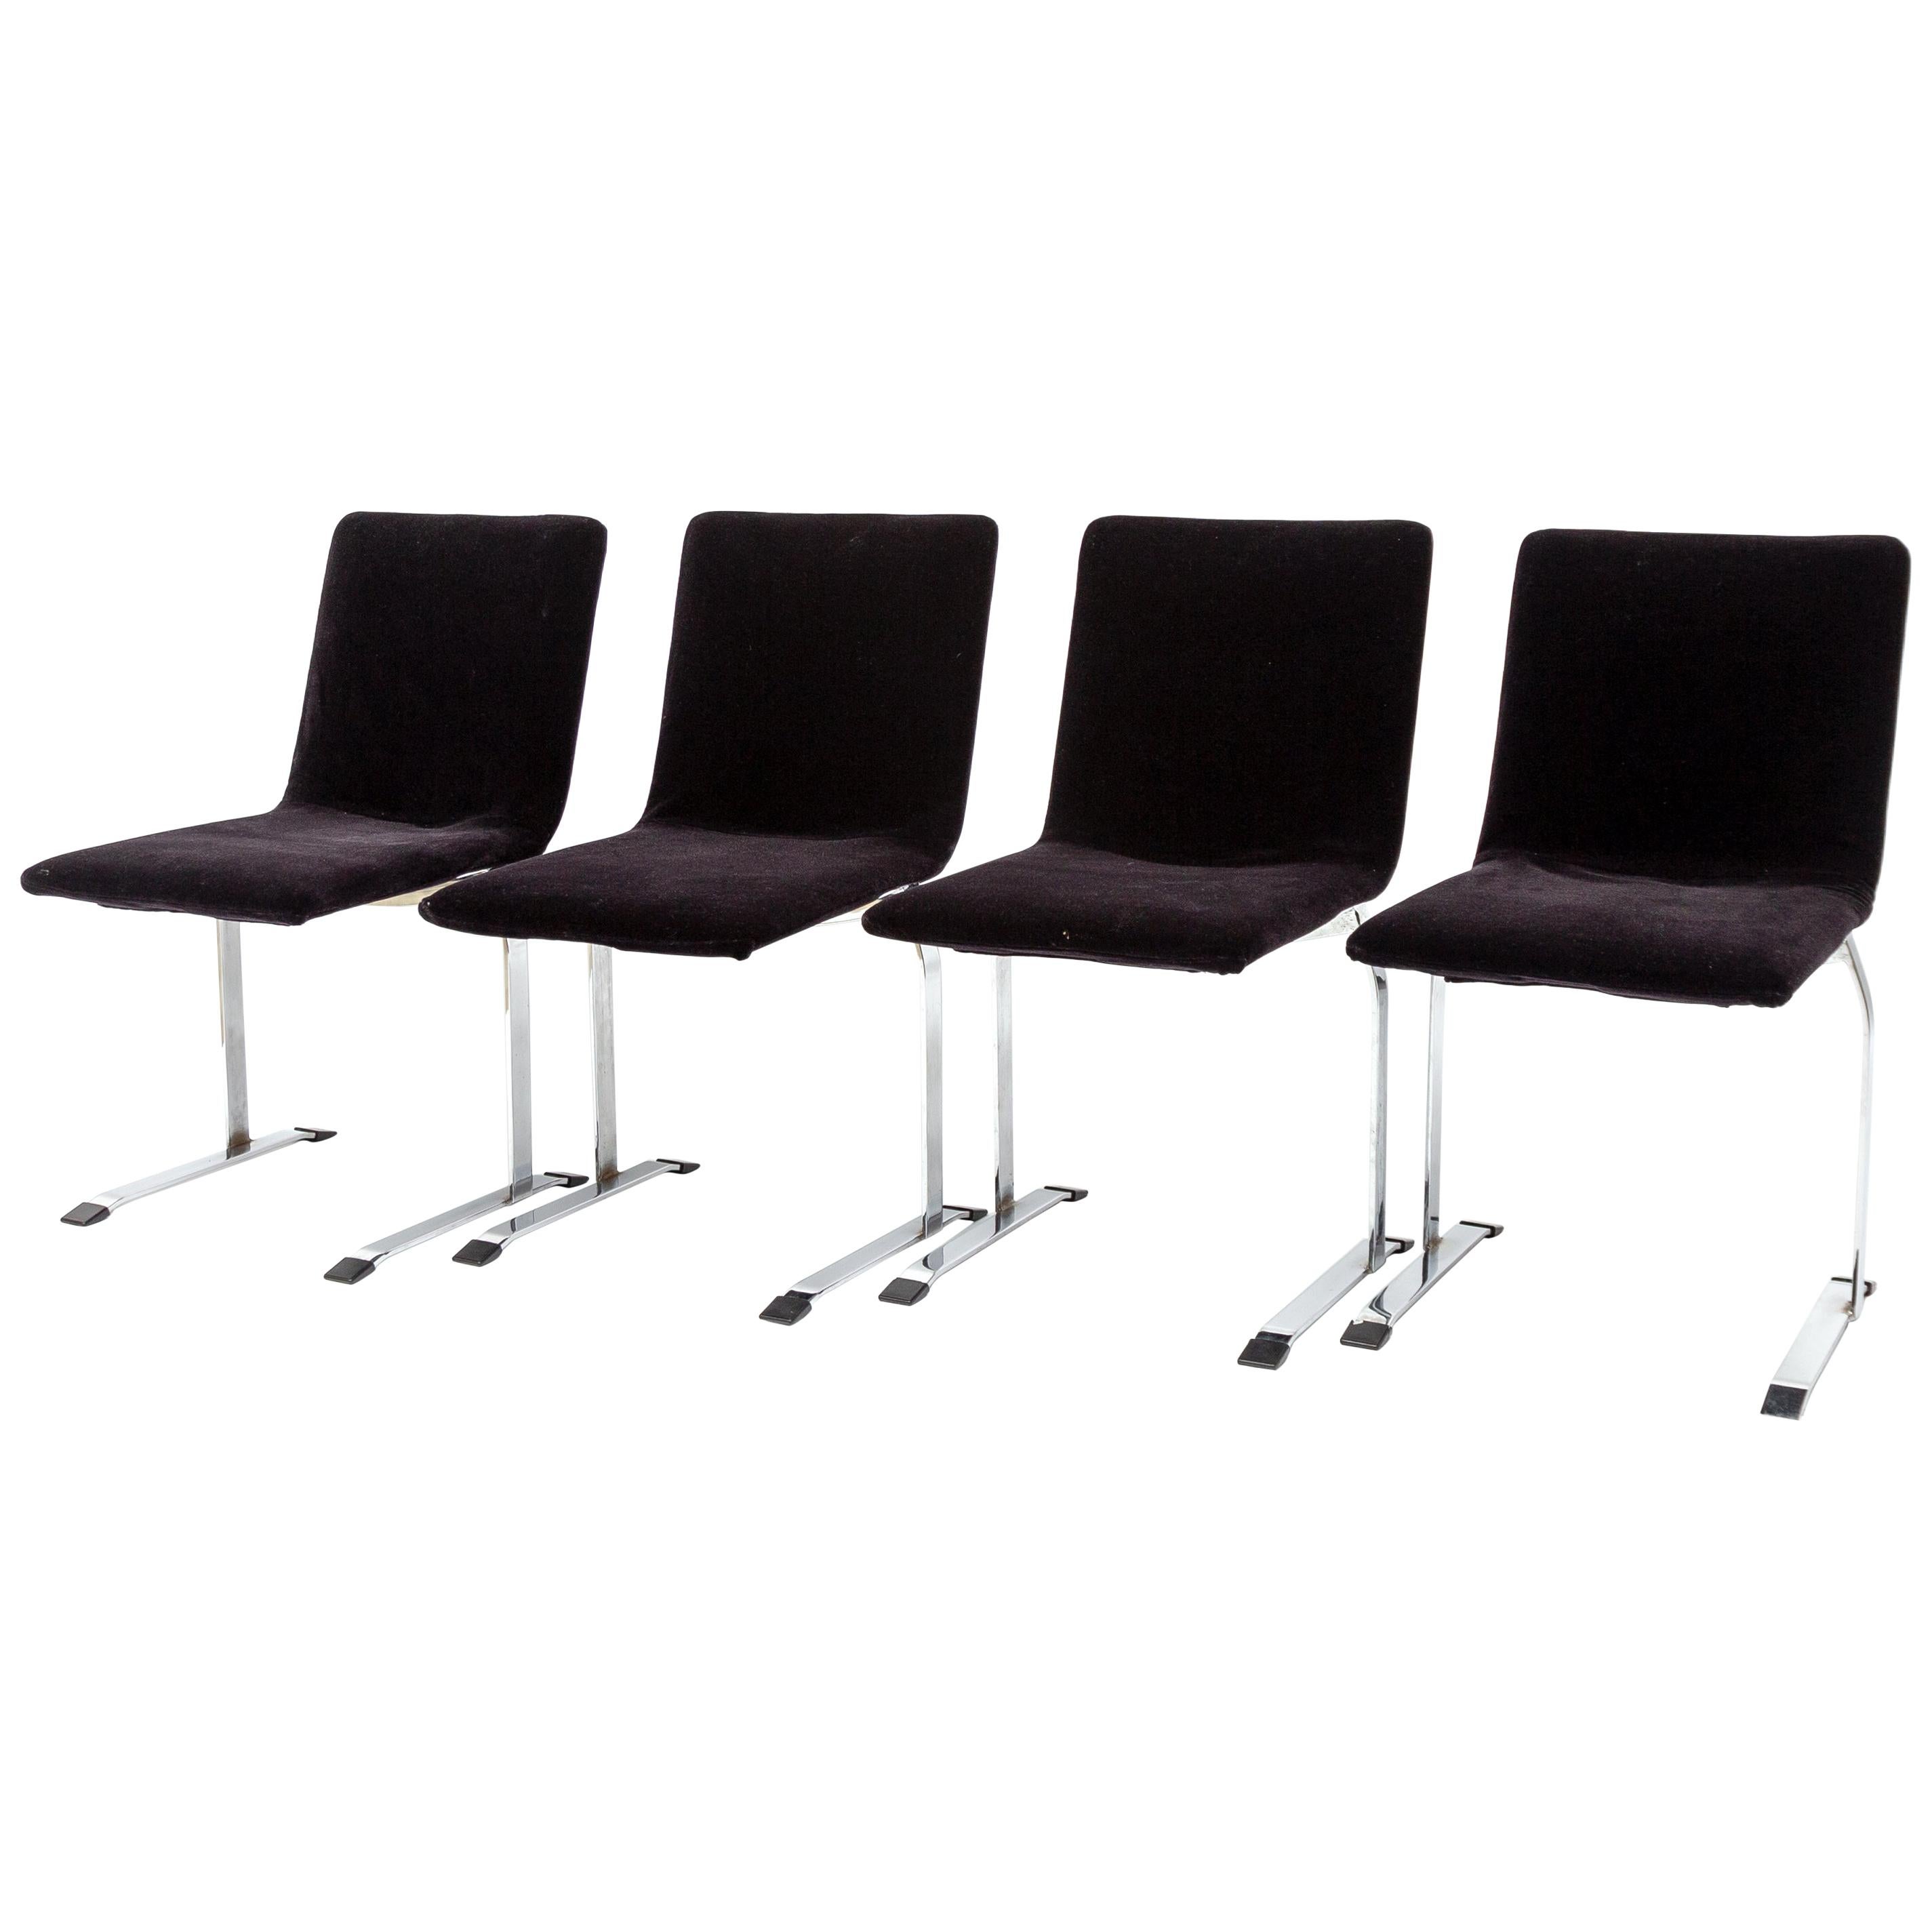 Set of 4 Saporiti Dining Chairs, 1970s newly upholstered in black mohair velvet